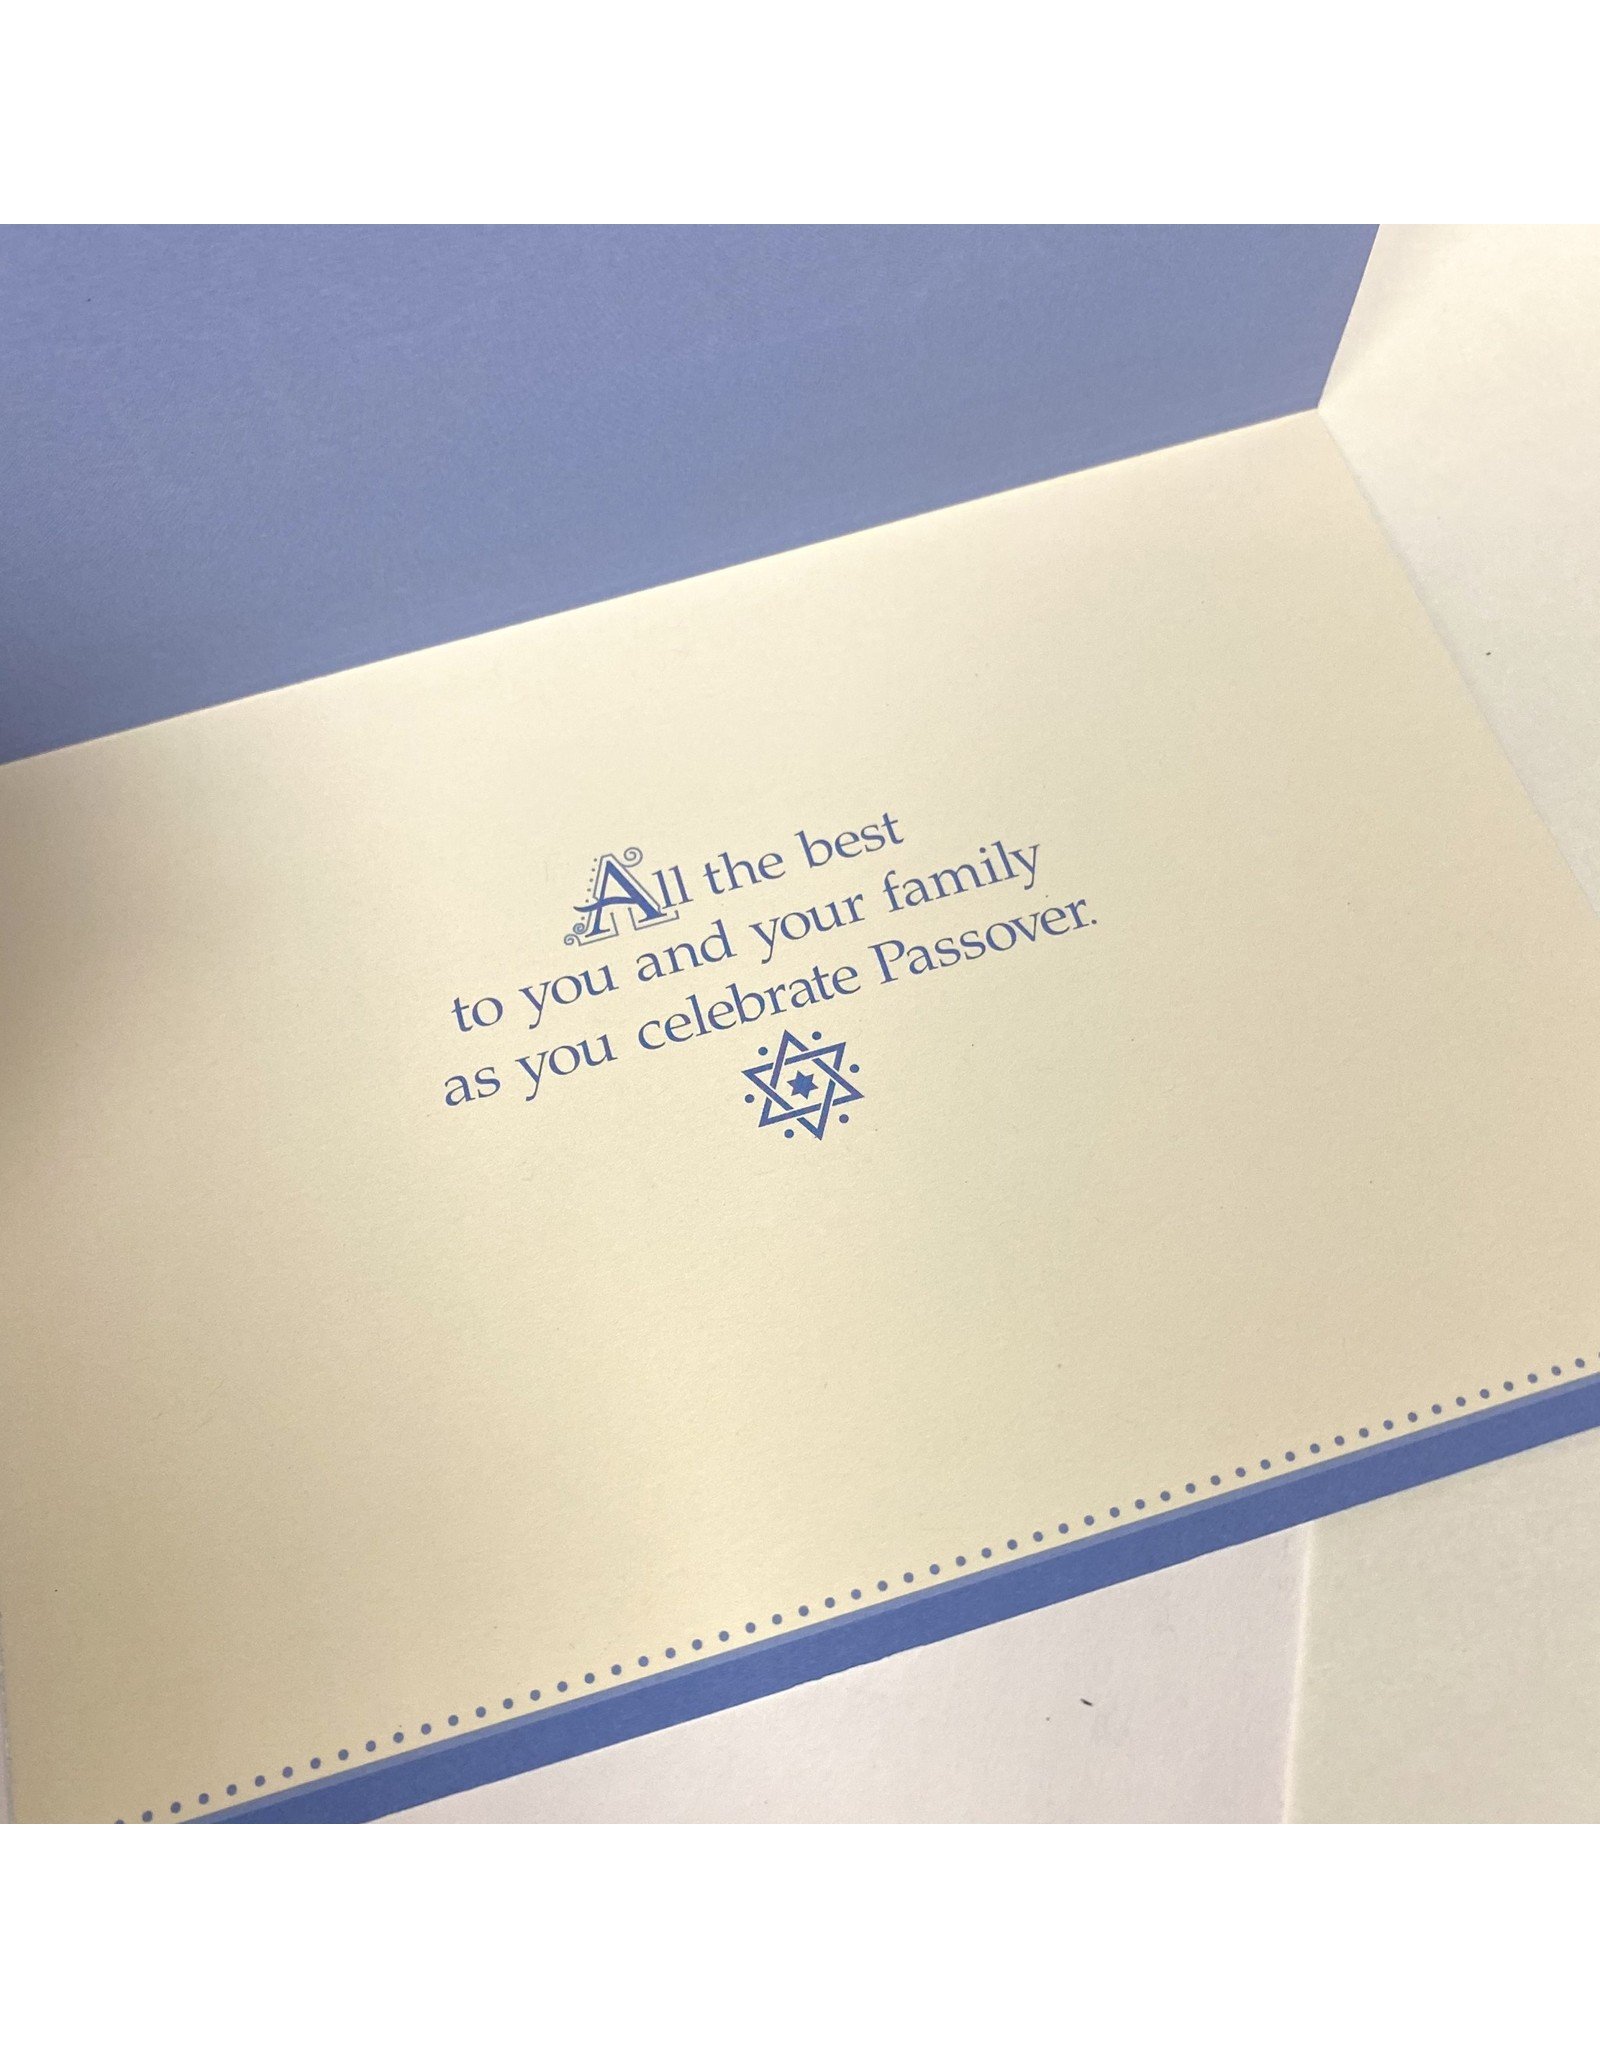 Design Design Greeting Card - Happy Passover